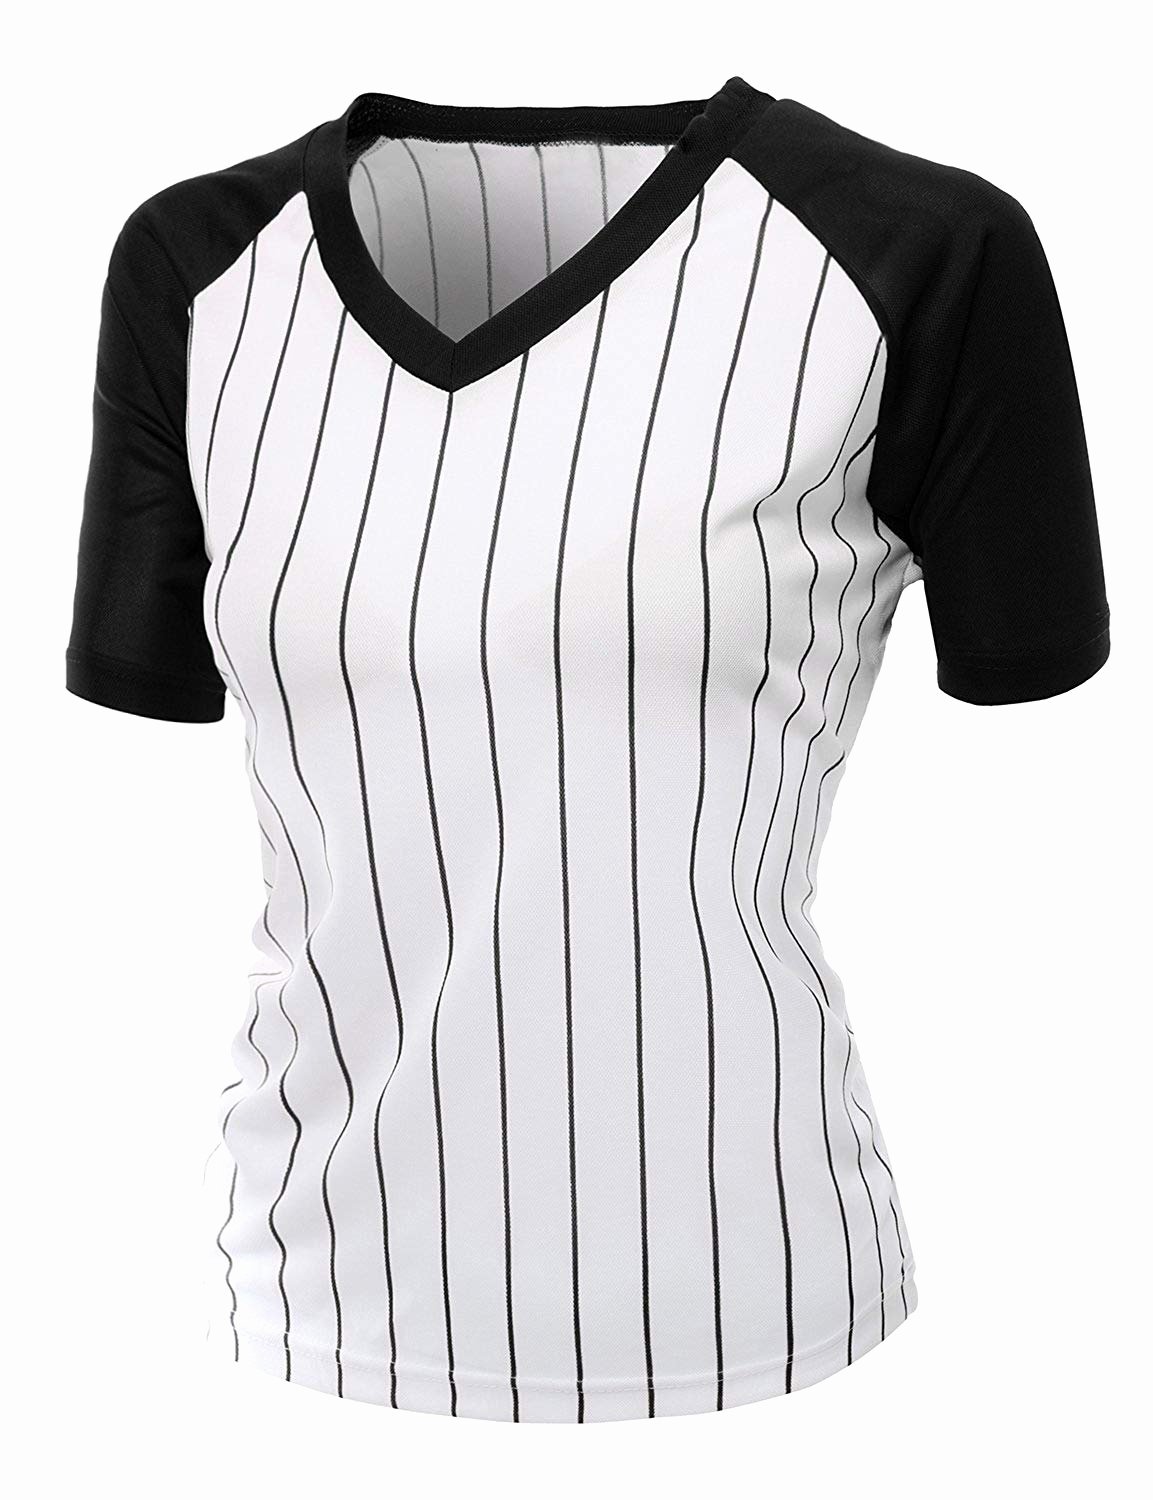 Baseball Uniform order form Template Beautiful Buy Baseball T Shirt Template Off